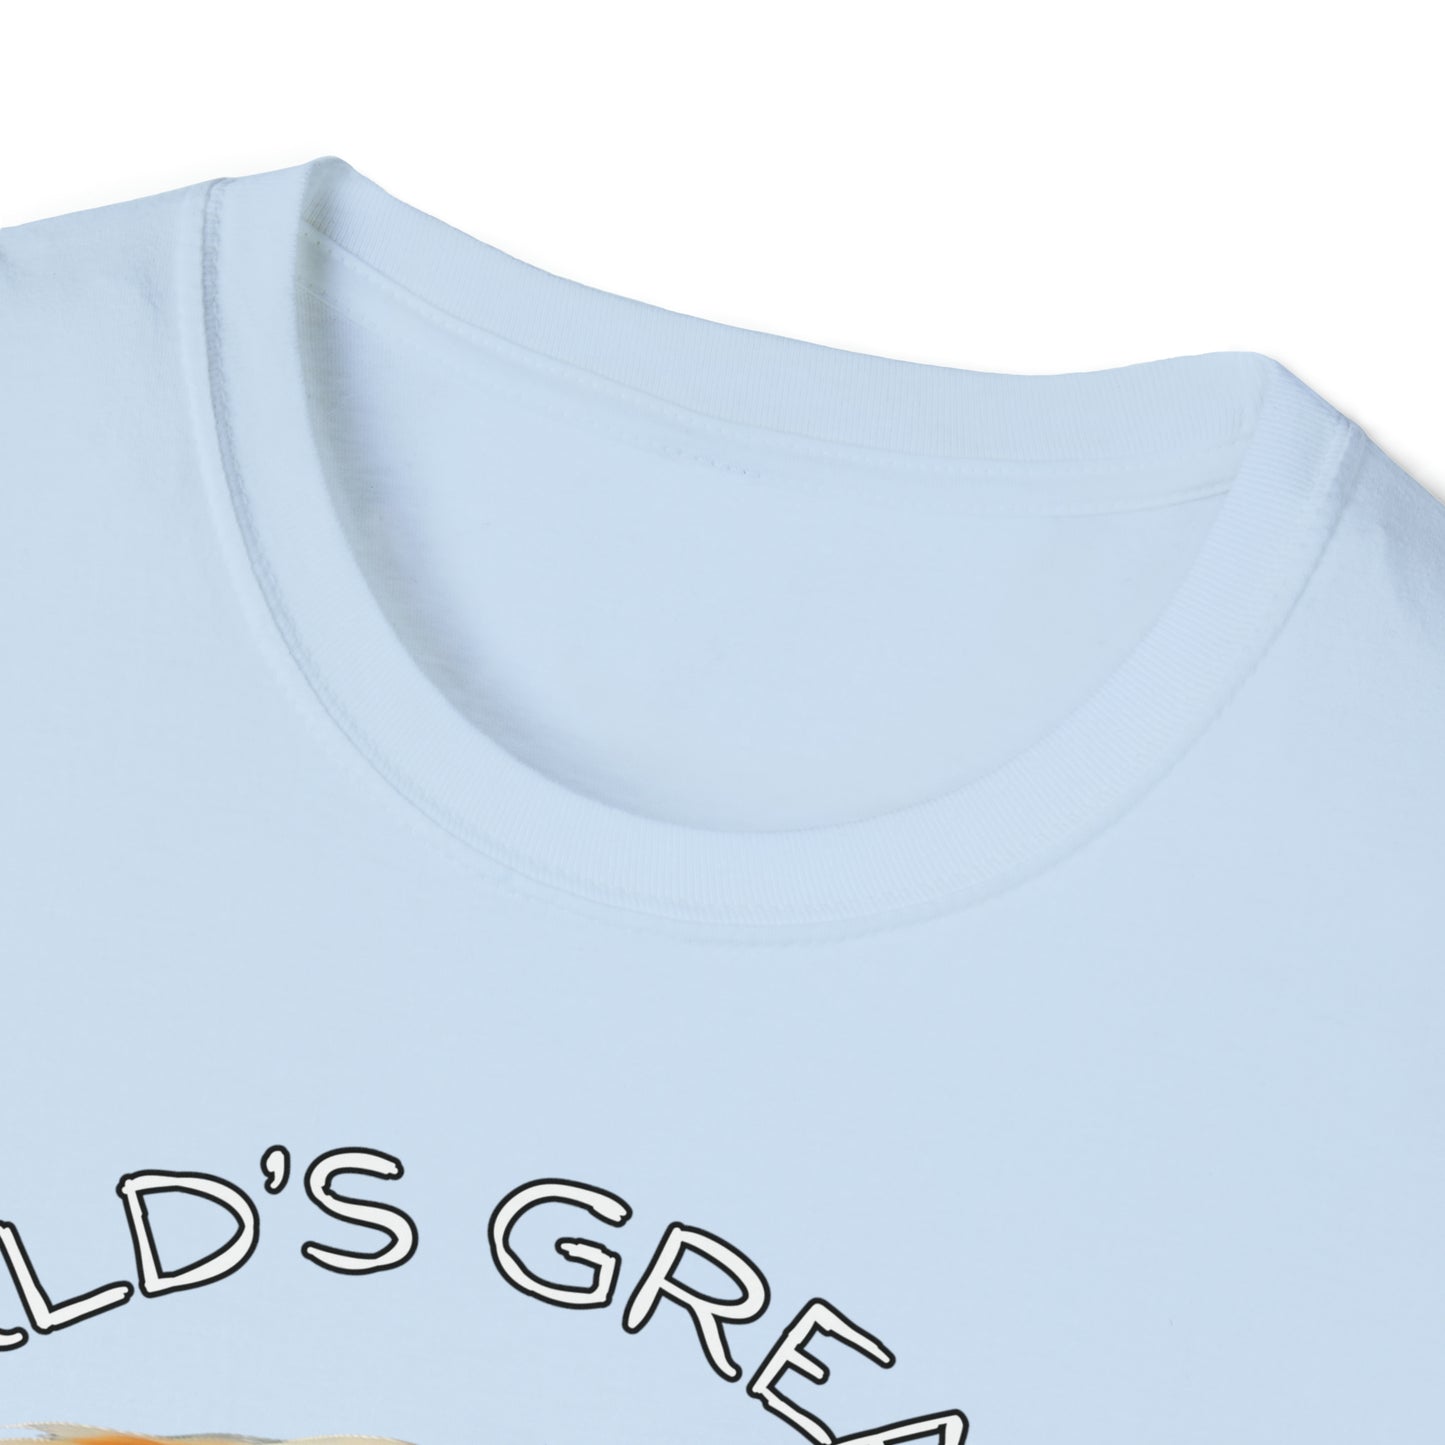 "World's Greatest Listener" (white text) Unisex Softstyle T-Shirt